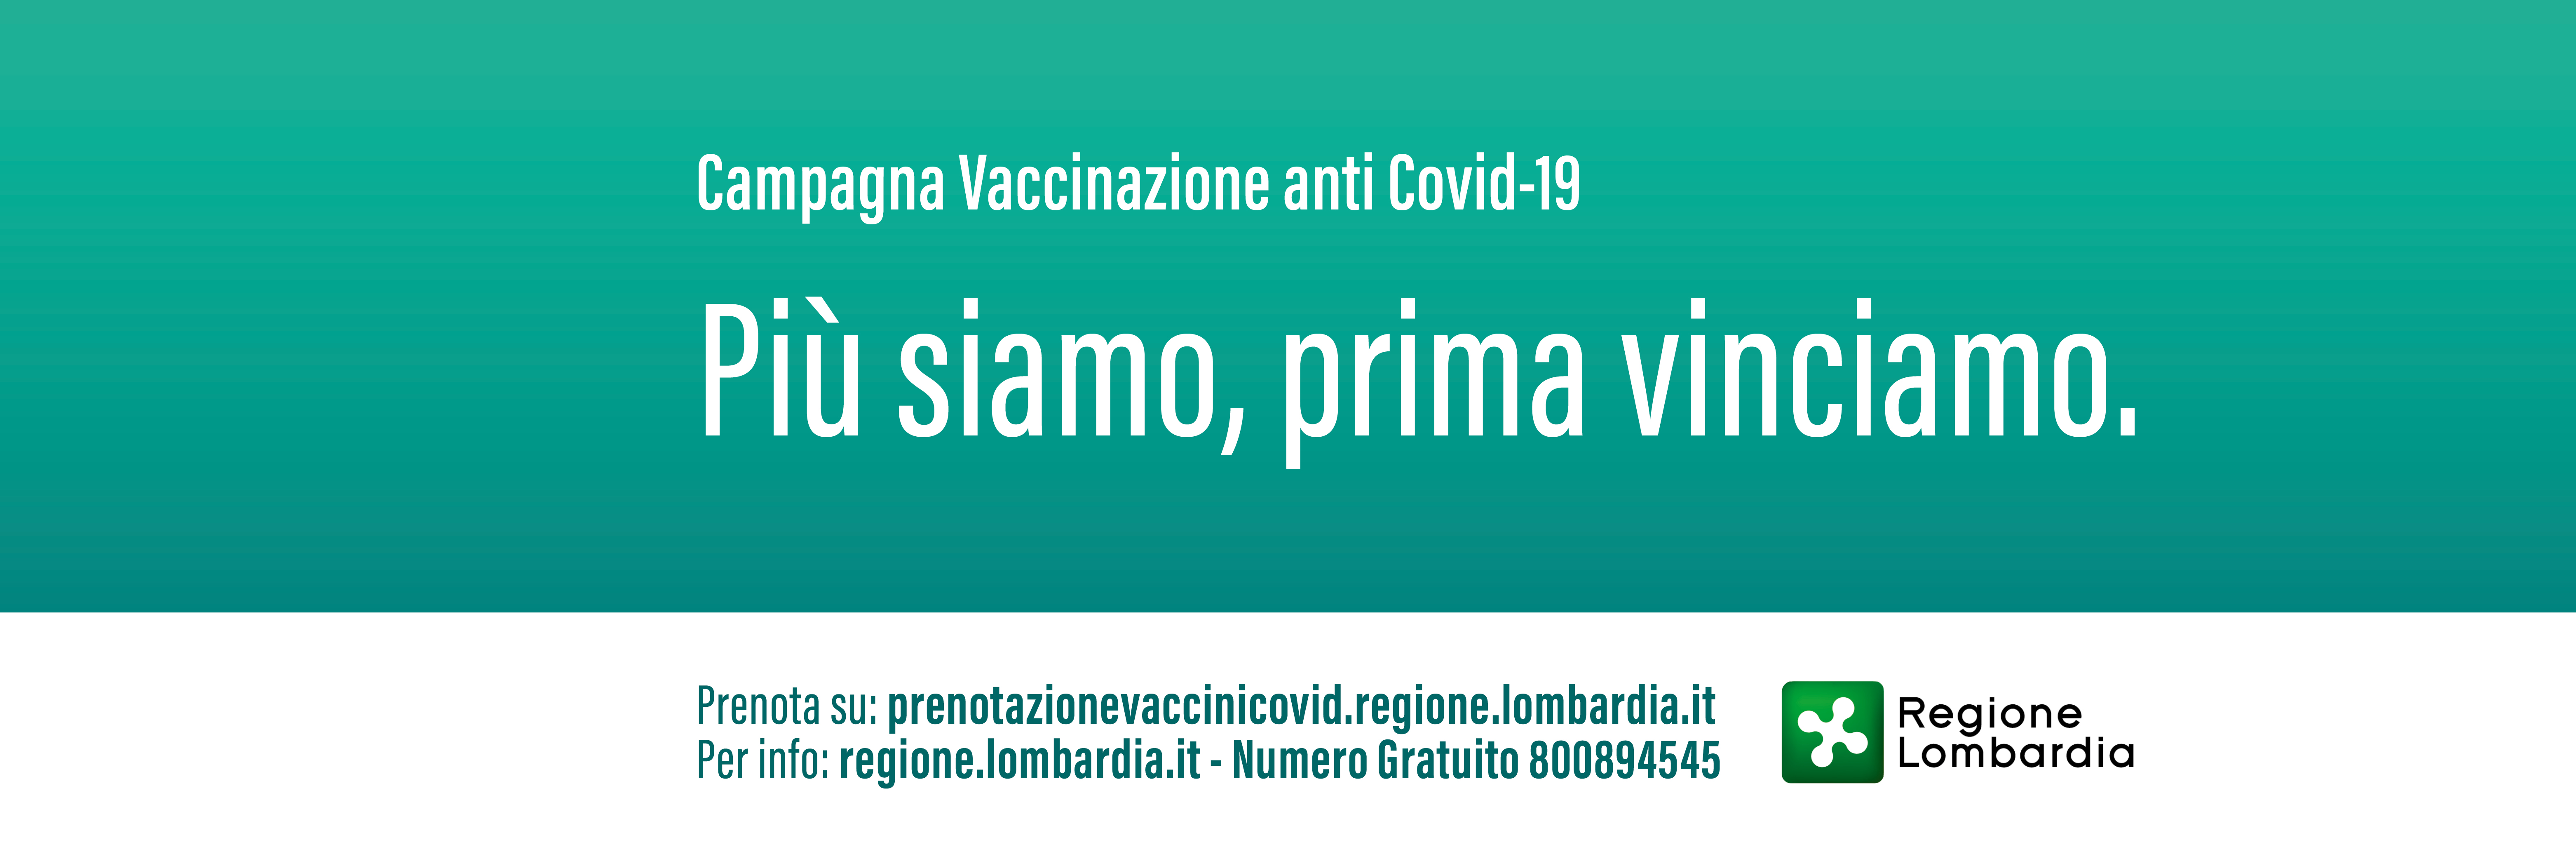 Vaccino papilloma virus regione lombardia - Vaccinazione anti papilloma virus regione lombardia,